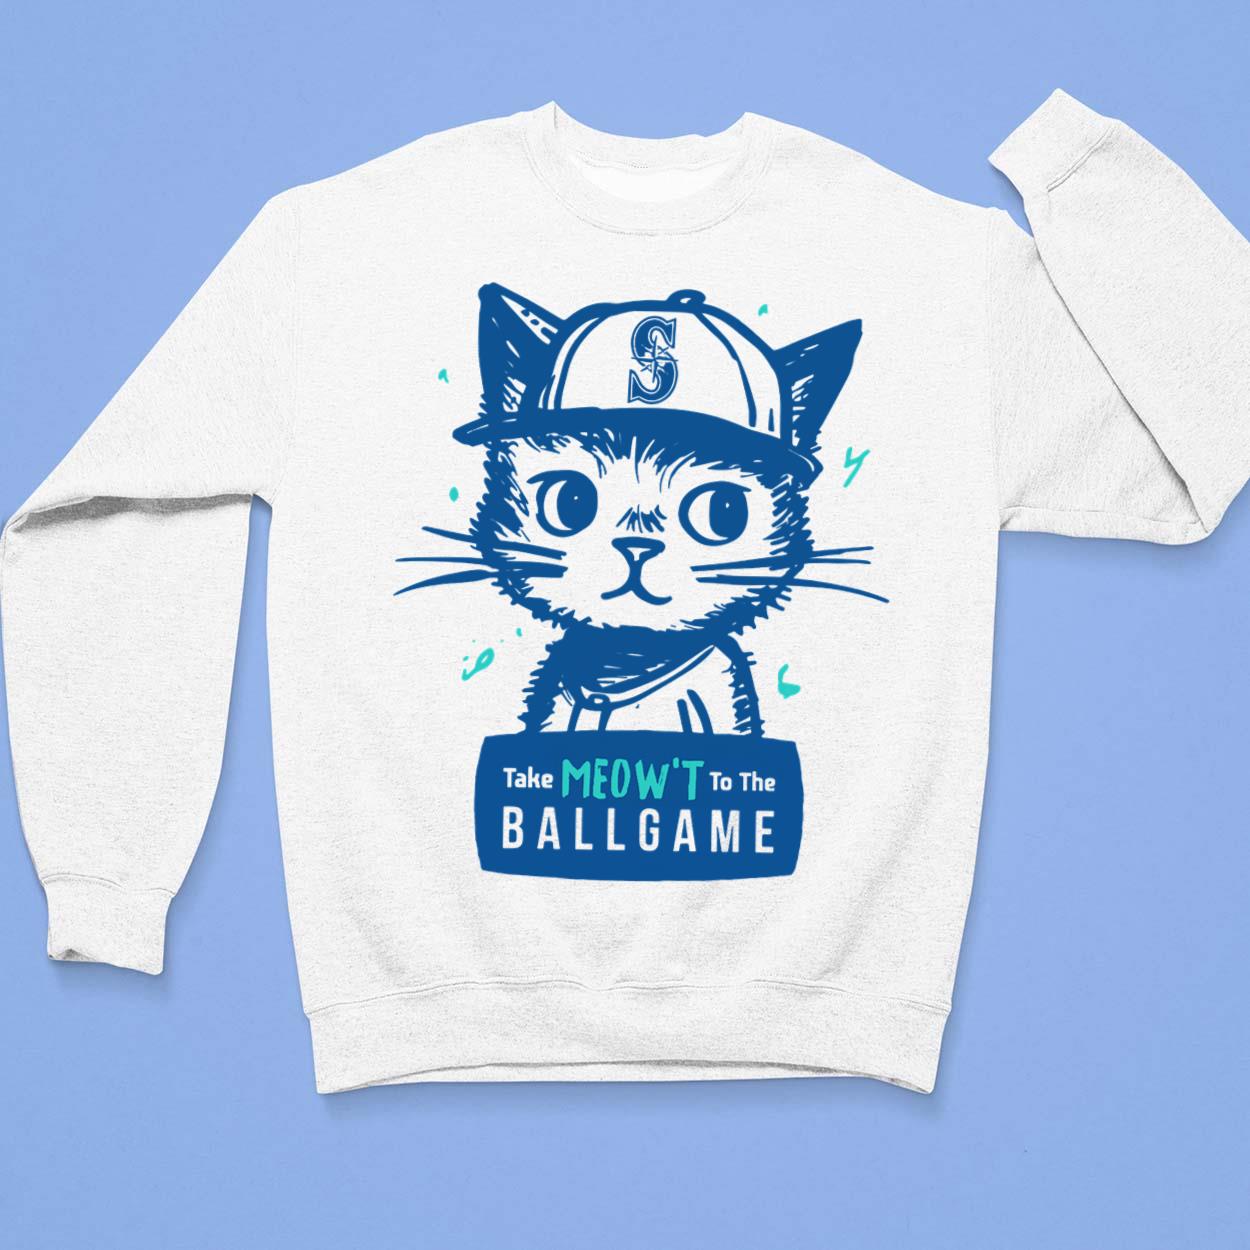 Mariners October Rise T-shirt 2022 - Bluecat